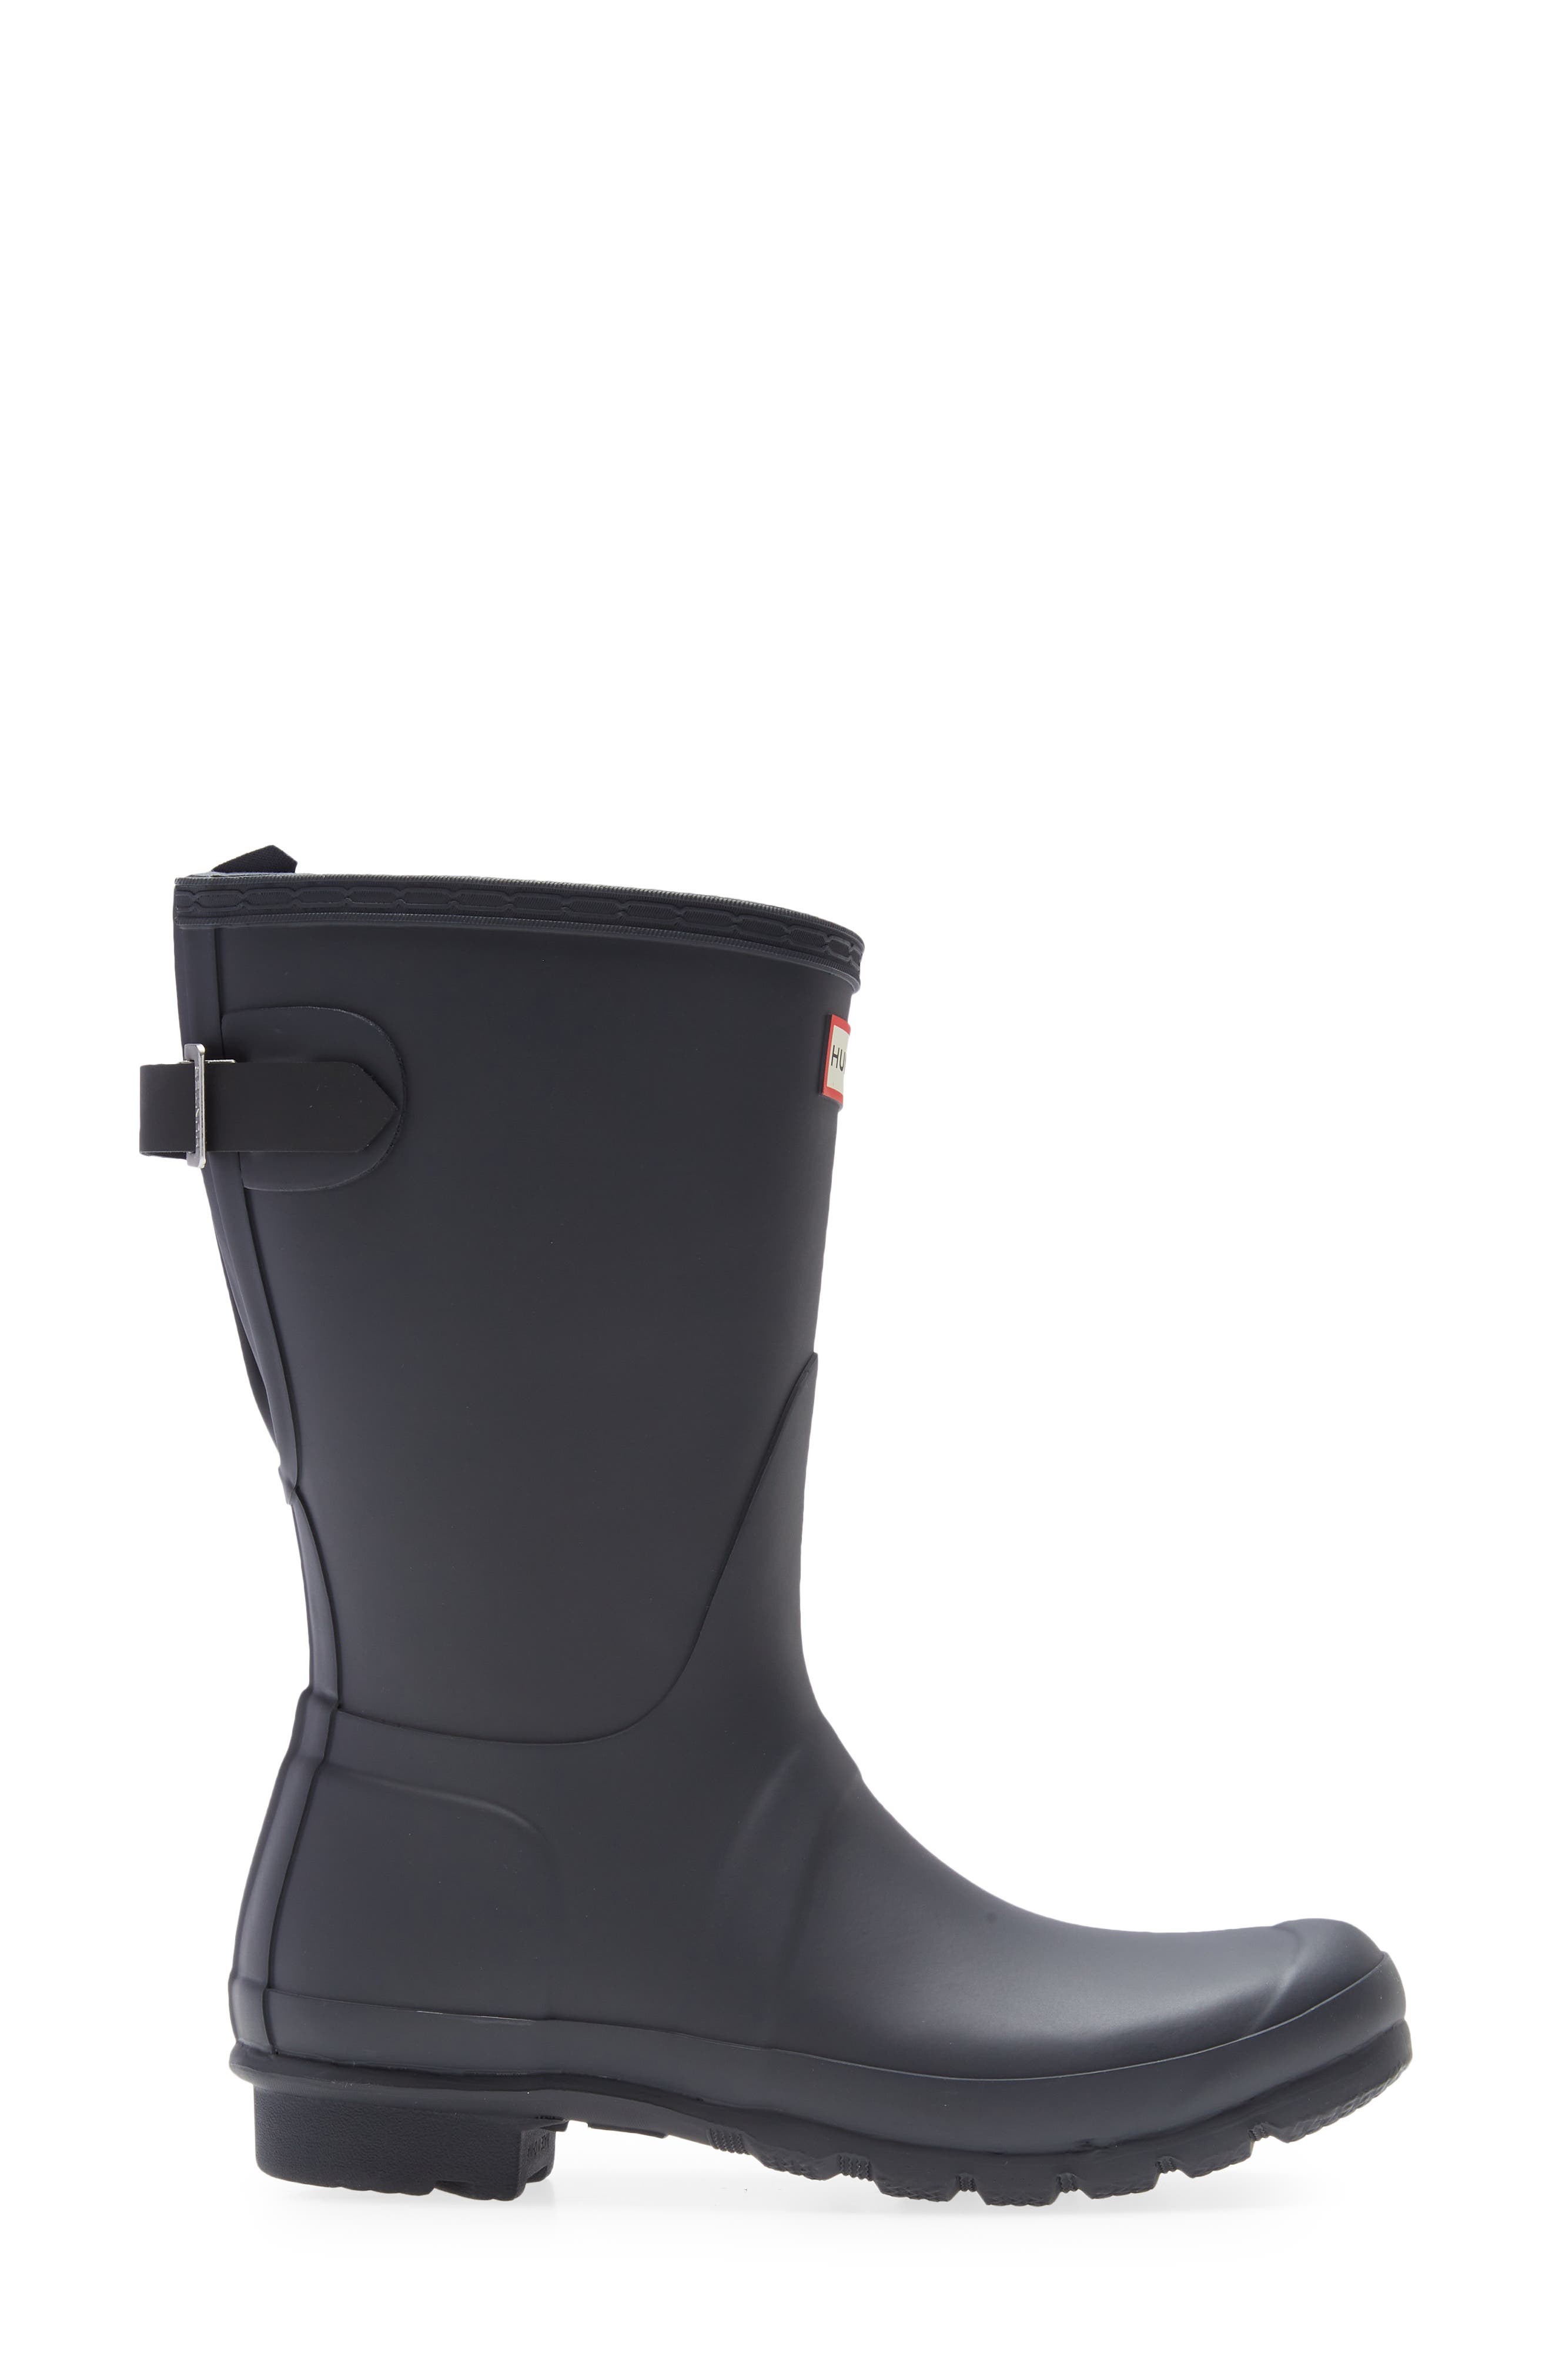 Size 8 5054916533966 Two Tone HUNTER Women's Original Back Adjustable Rain Boots